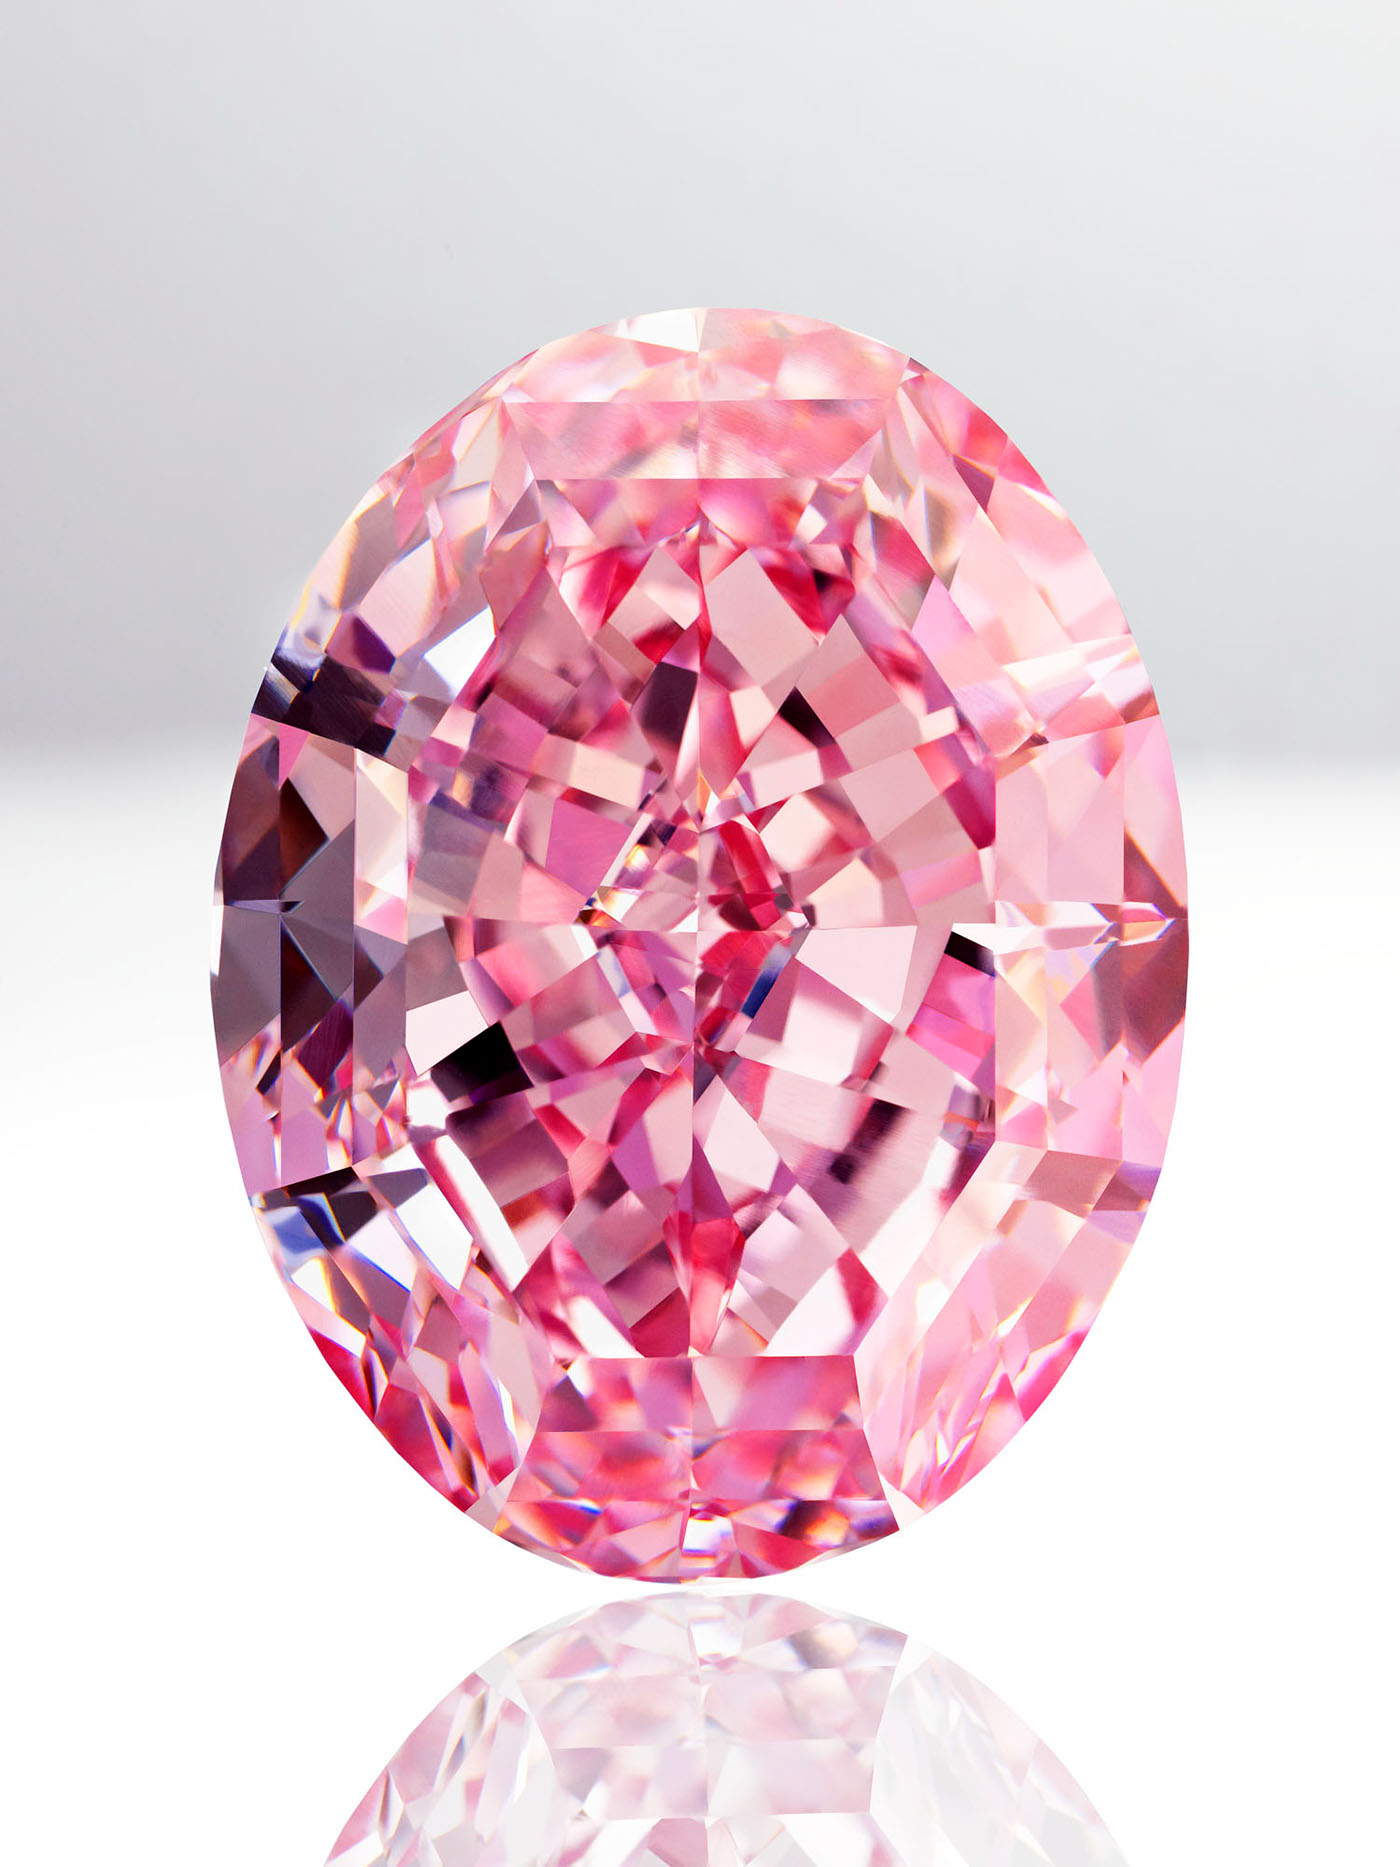 The "Pink Star" Diamond 